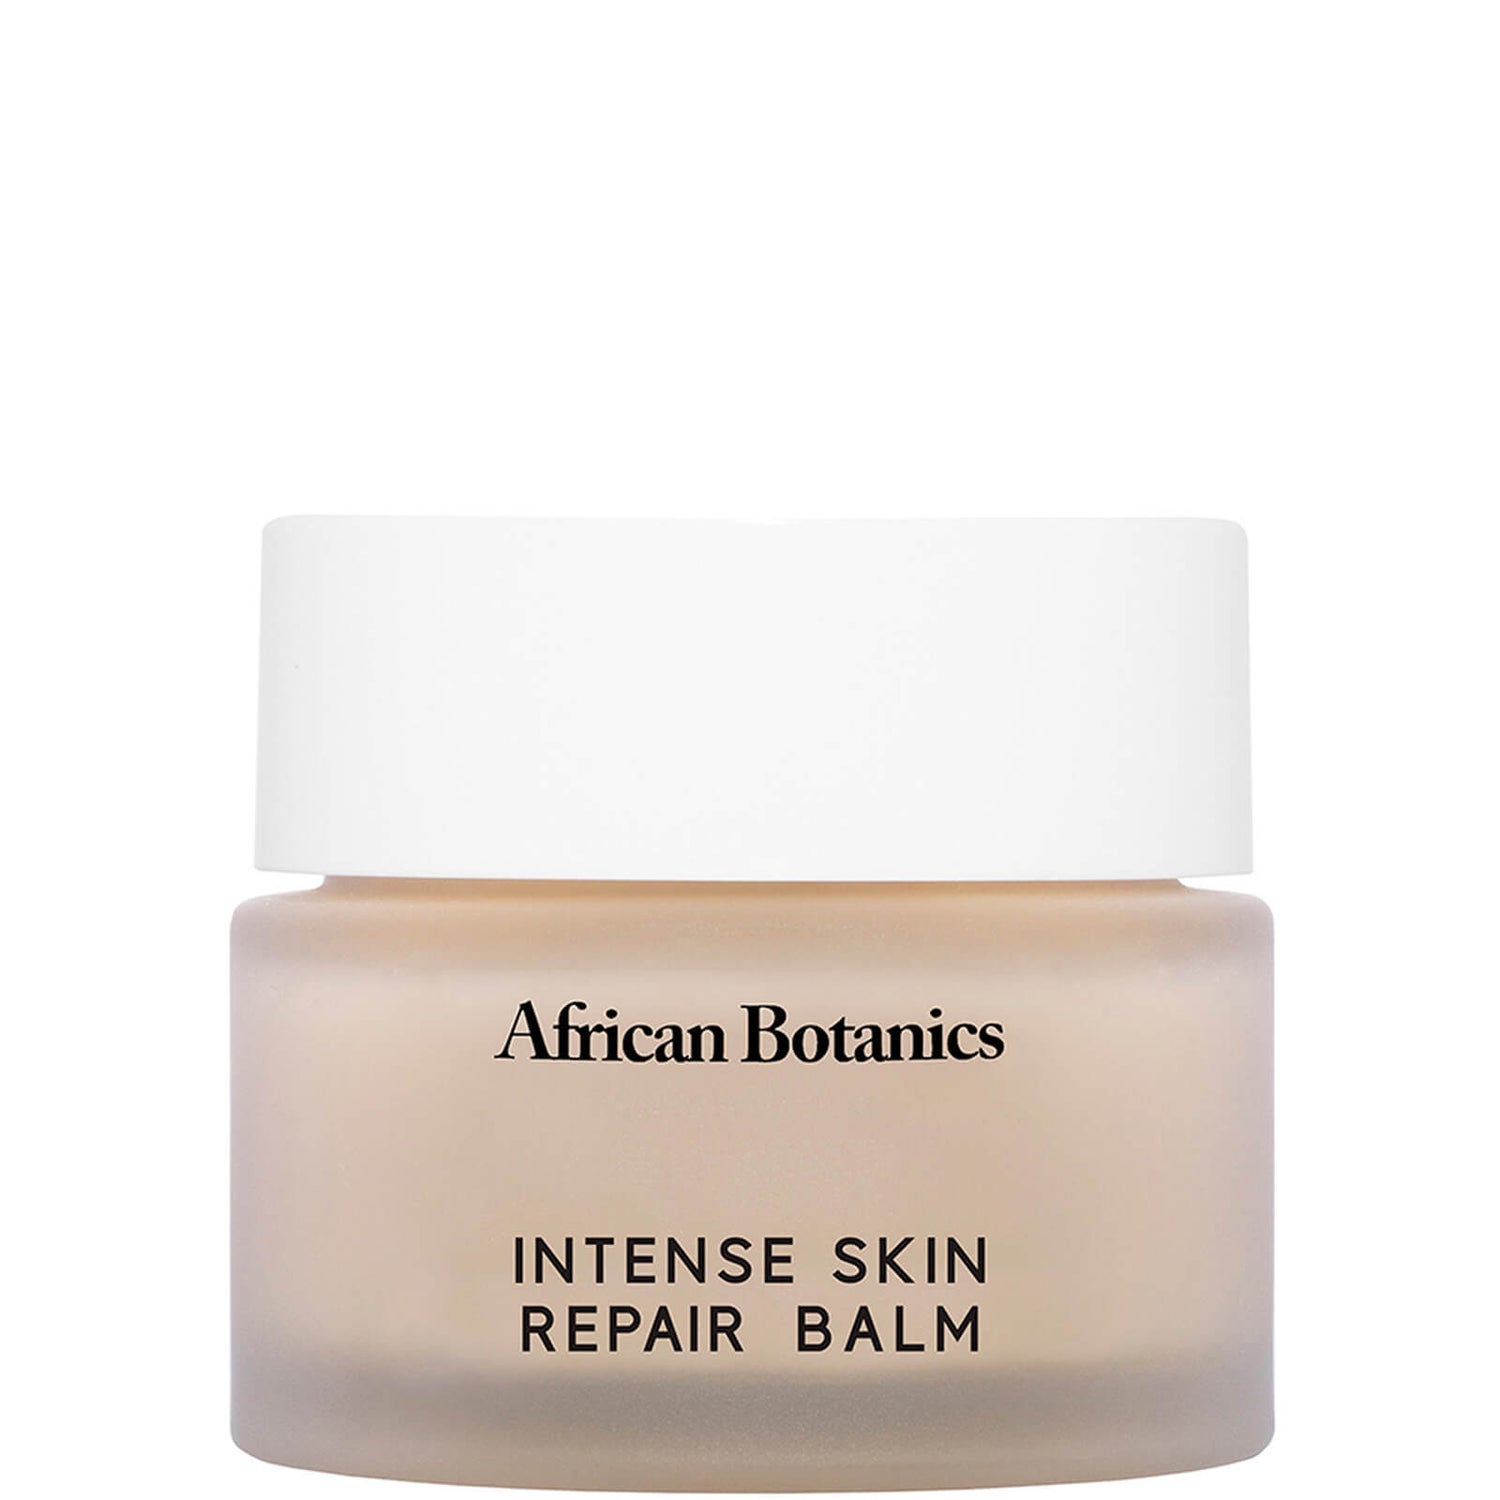 African Botanics Intense Skin Repair Balm